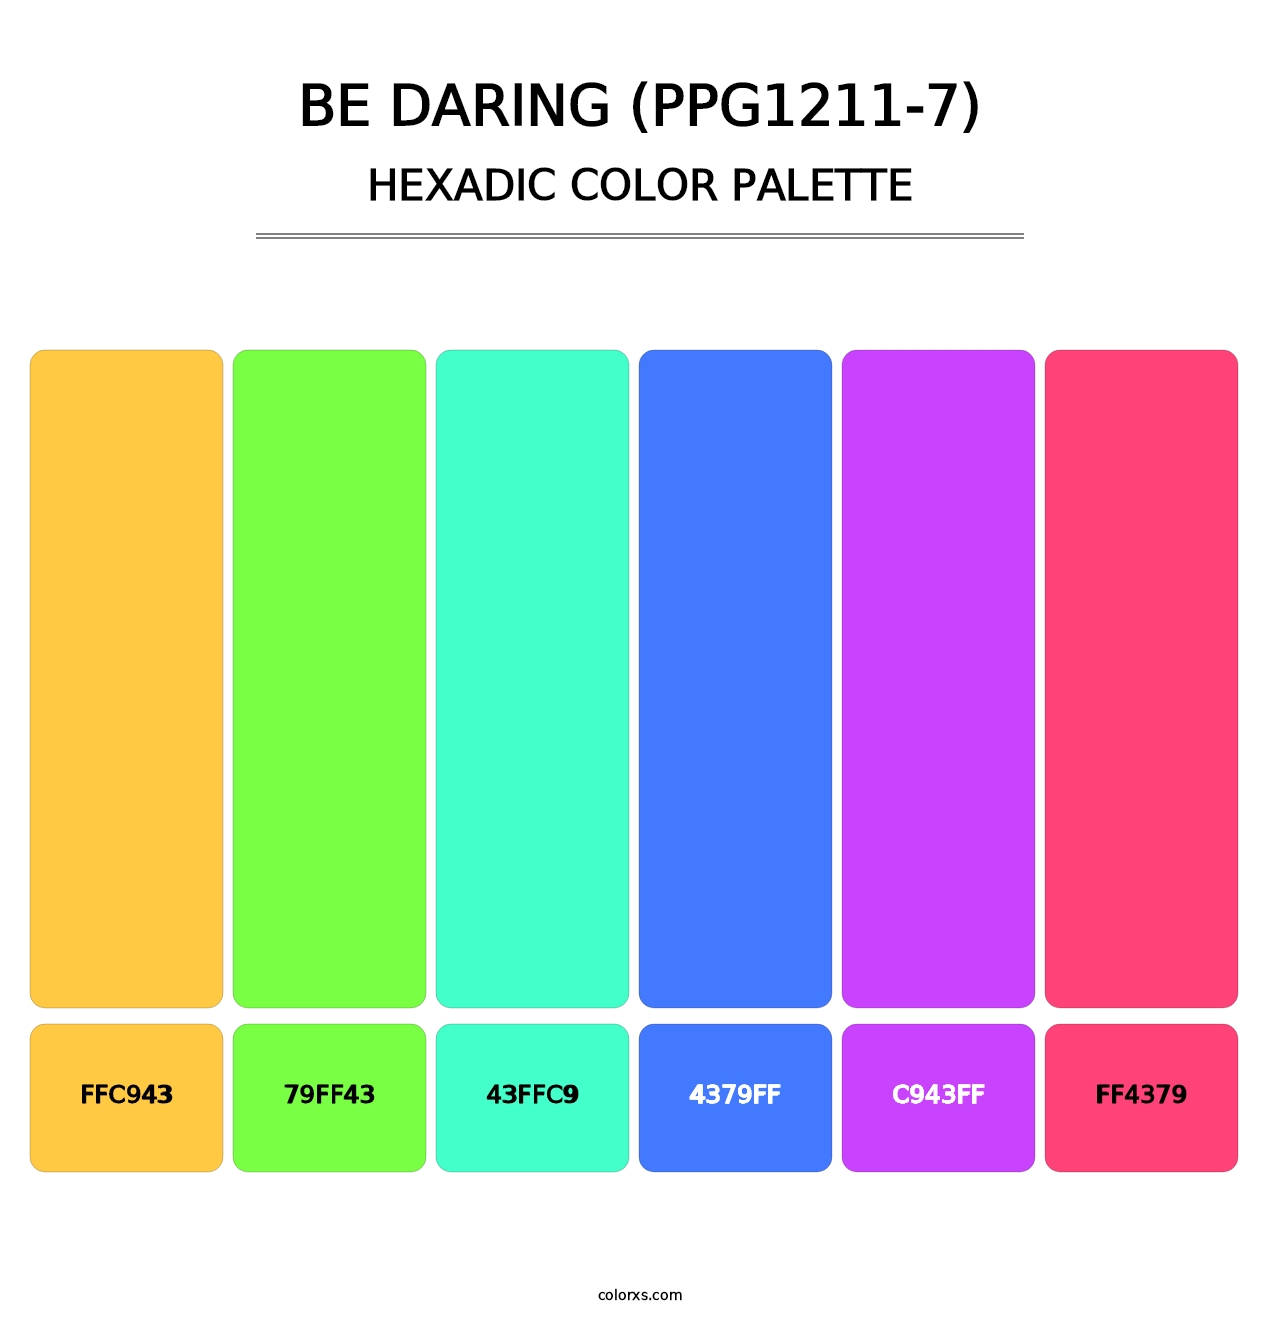 Be Daring (PPG1211-7) - Hexadic Color Palette